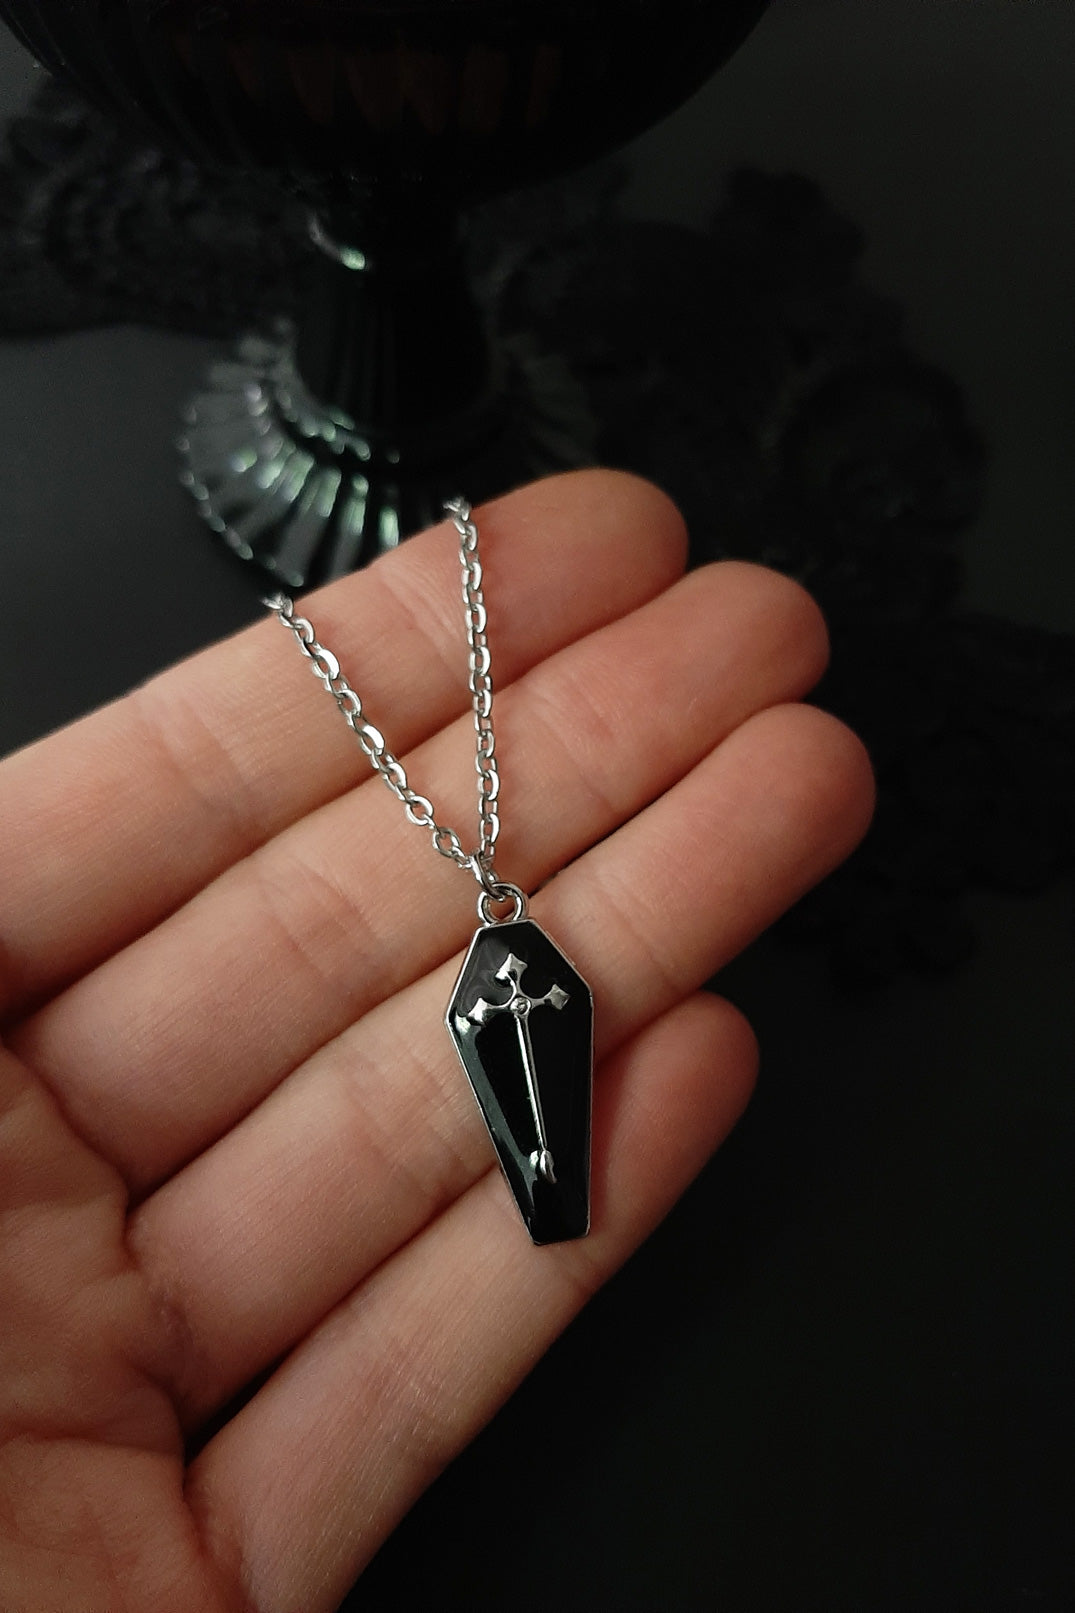 Black coffin vampire gothic necklace